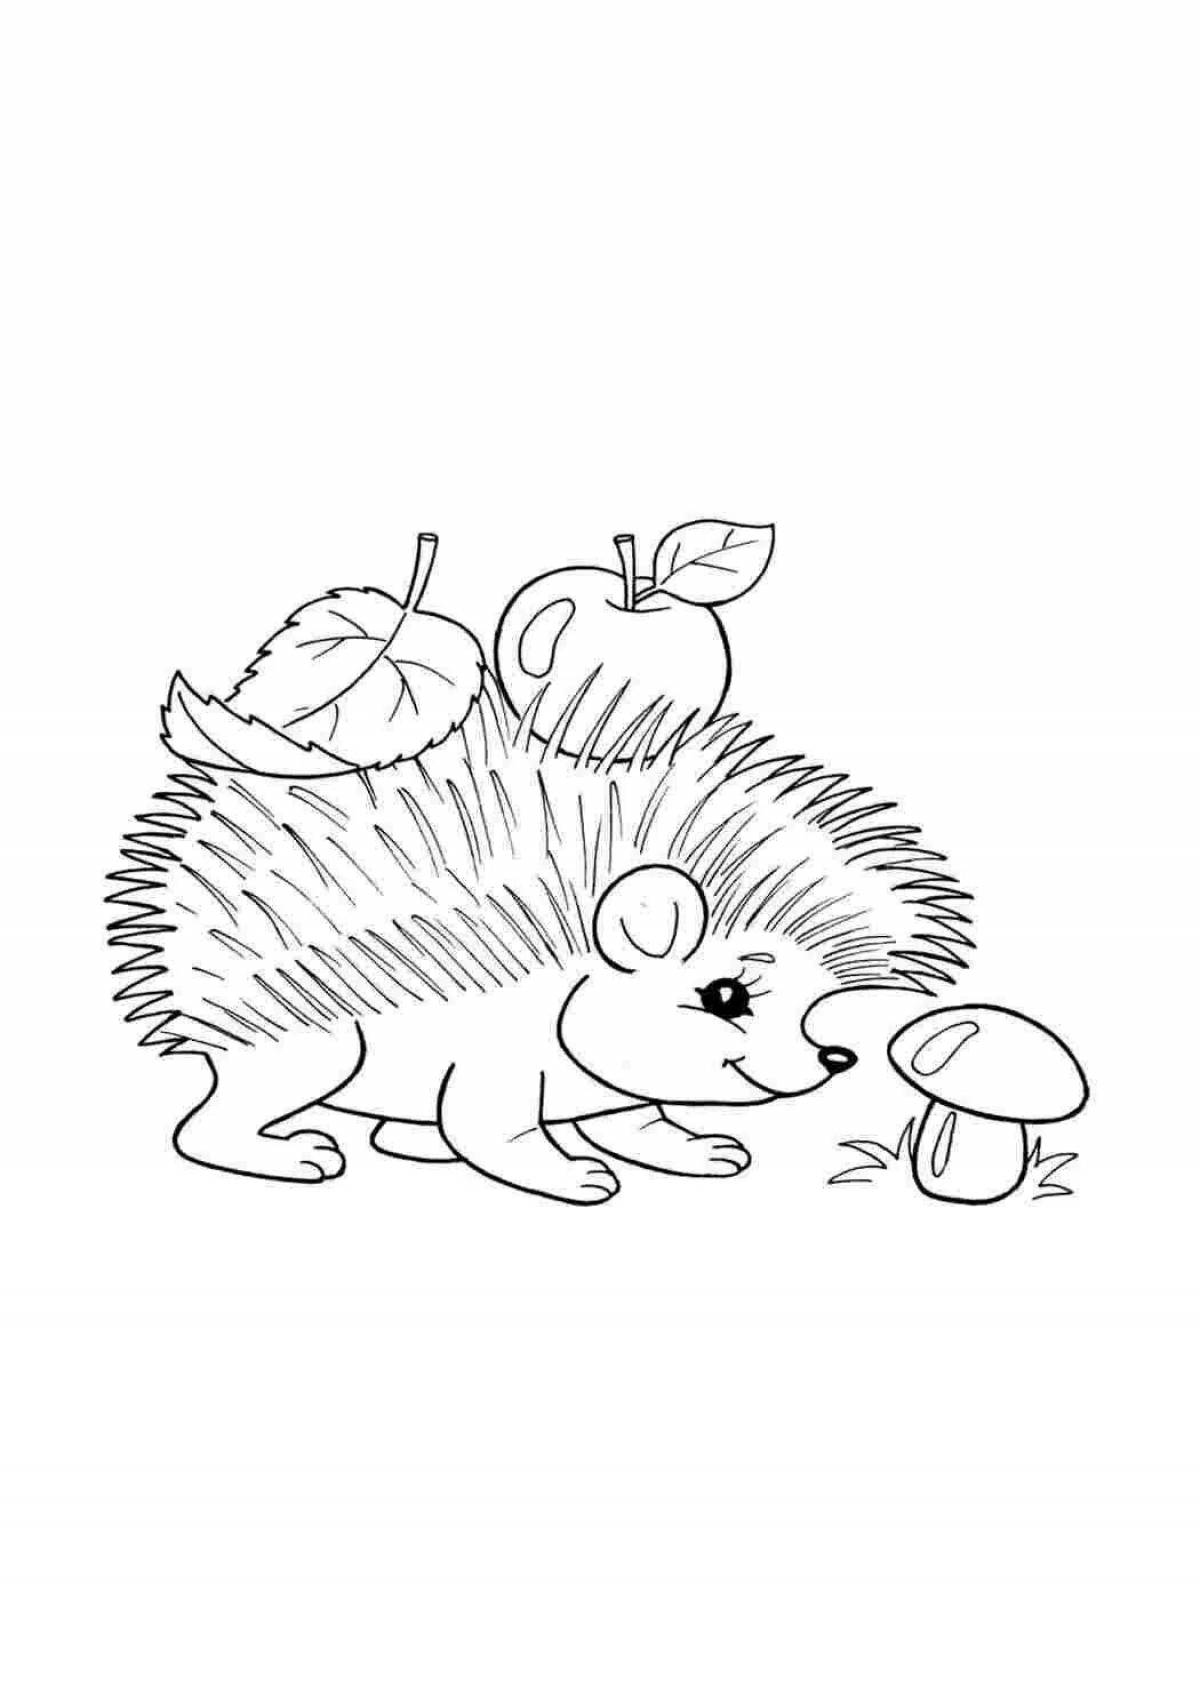 Snickering hedgehog with mushrooms